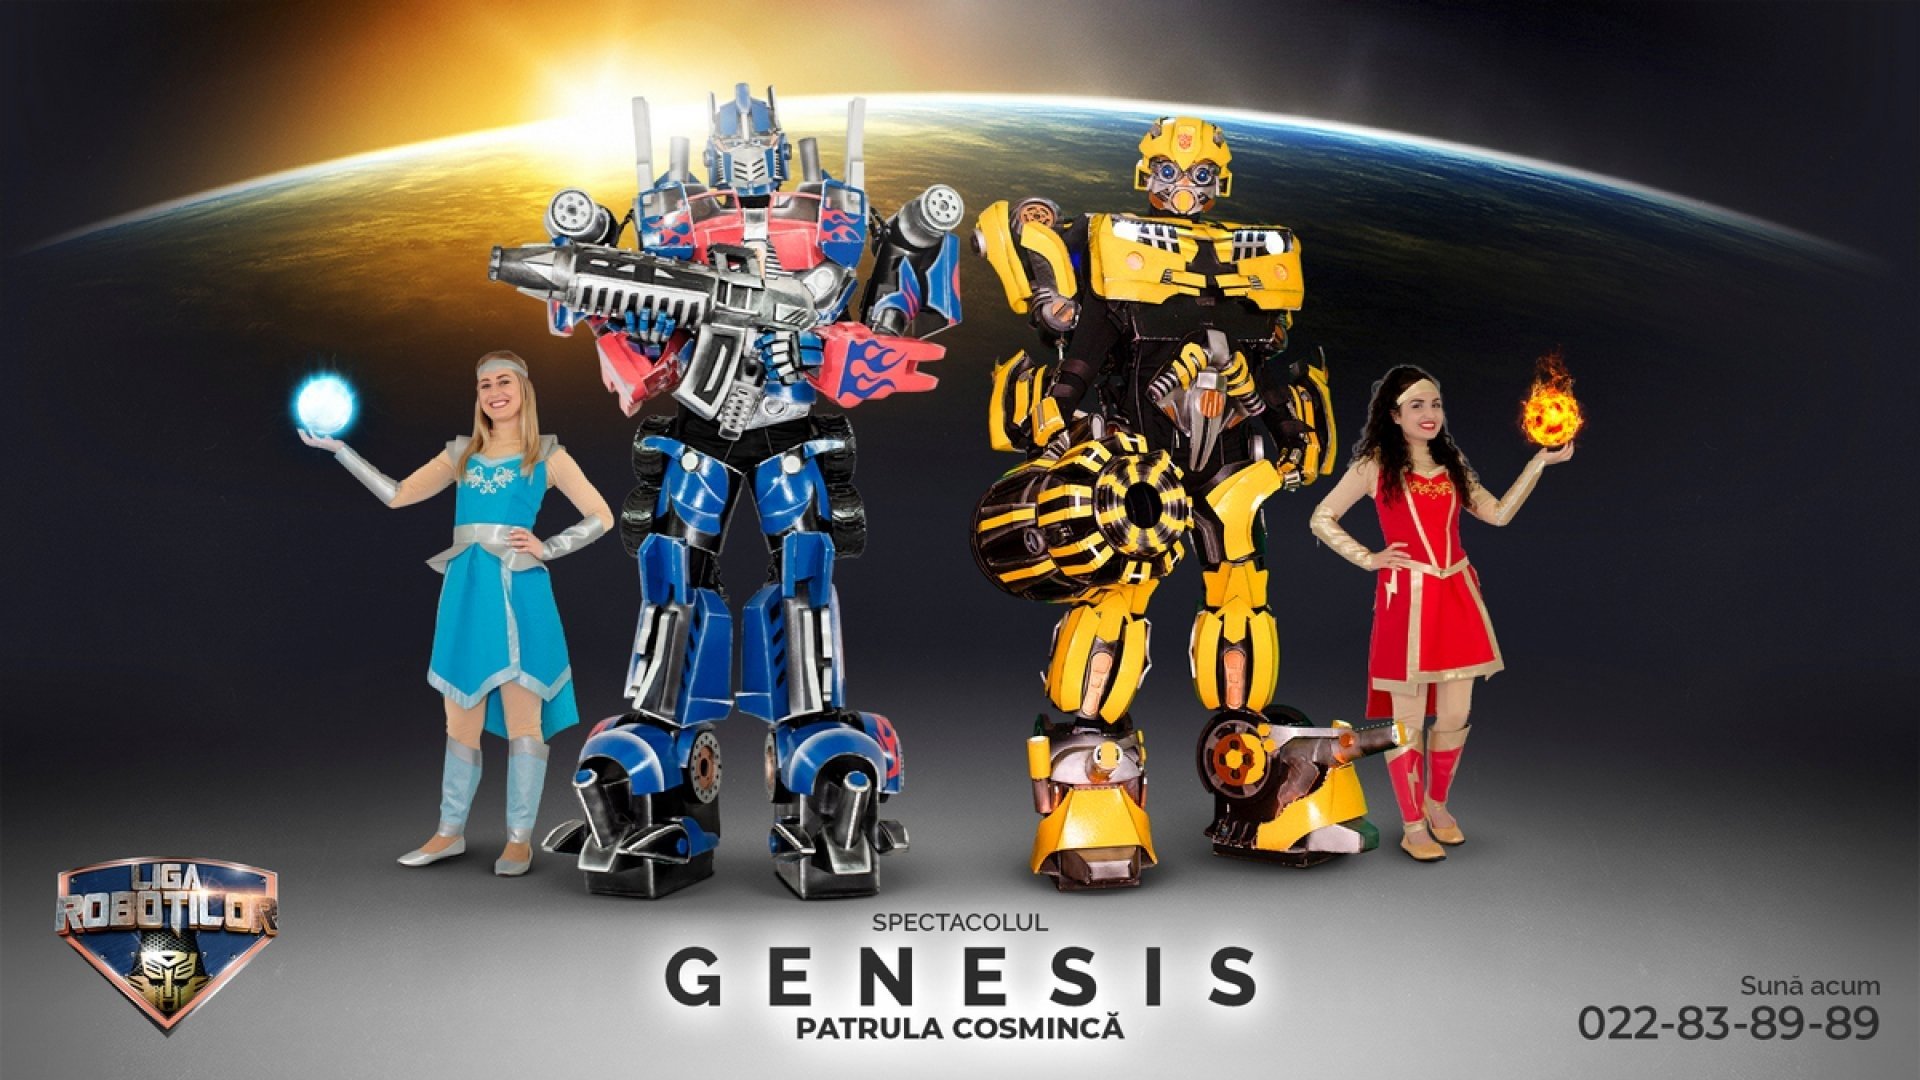 Genesis - Calatorie in Sistemul Solar | Spectacol Interactiv de Animatie pentru copii | Iunie 2022